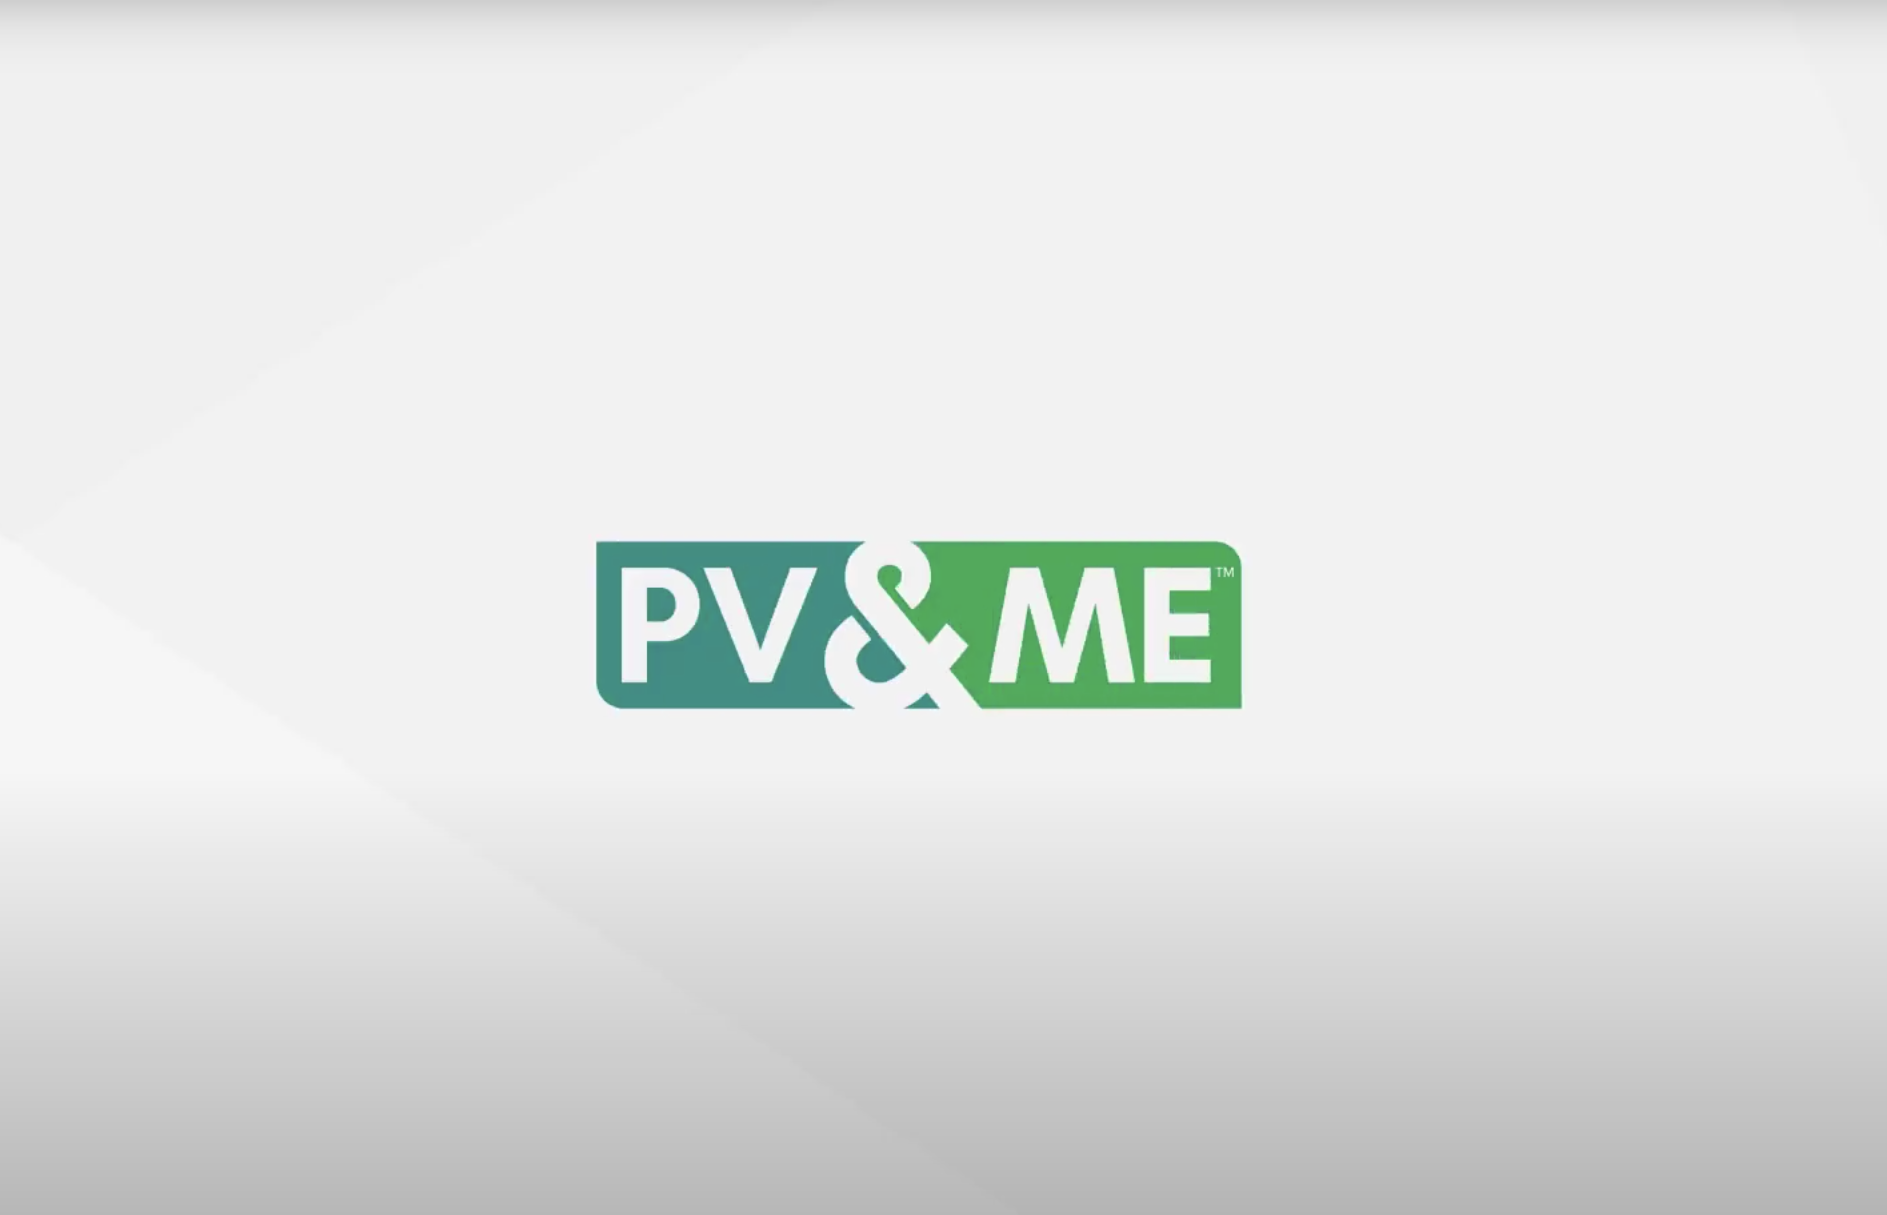 The logo for PharmaEssentias PVME campaign